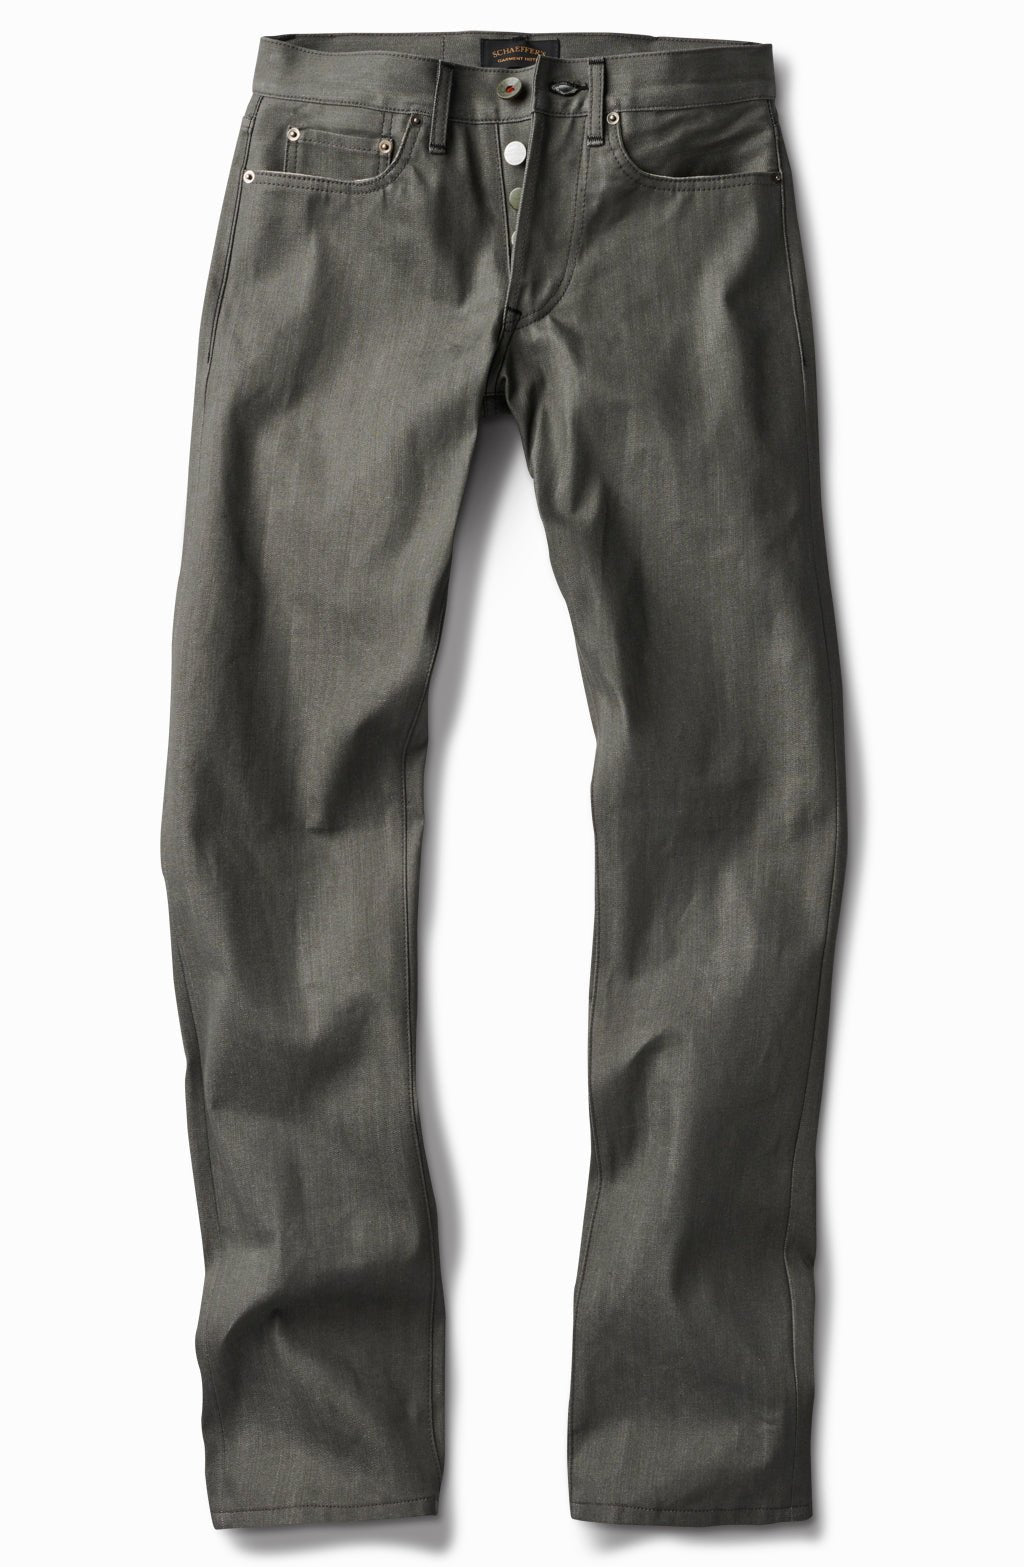 Rope Dyed Grey - Standard Rise Straight Leg - Schaeffer's Garment Hotel